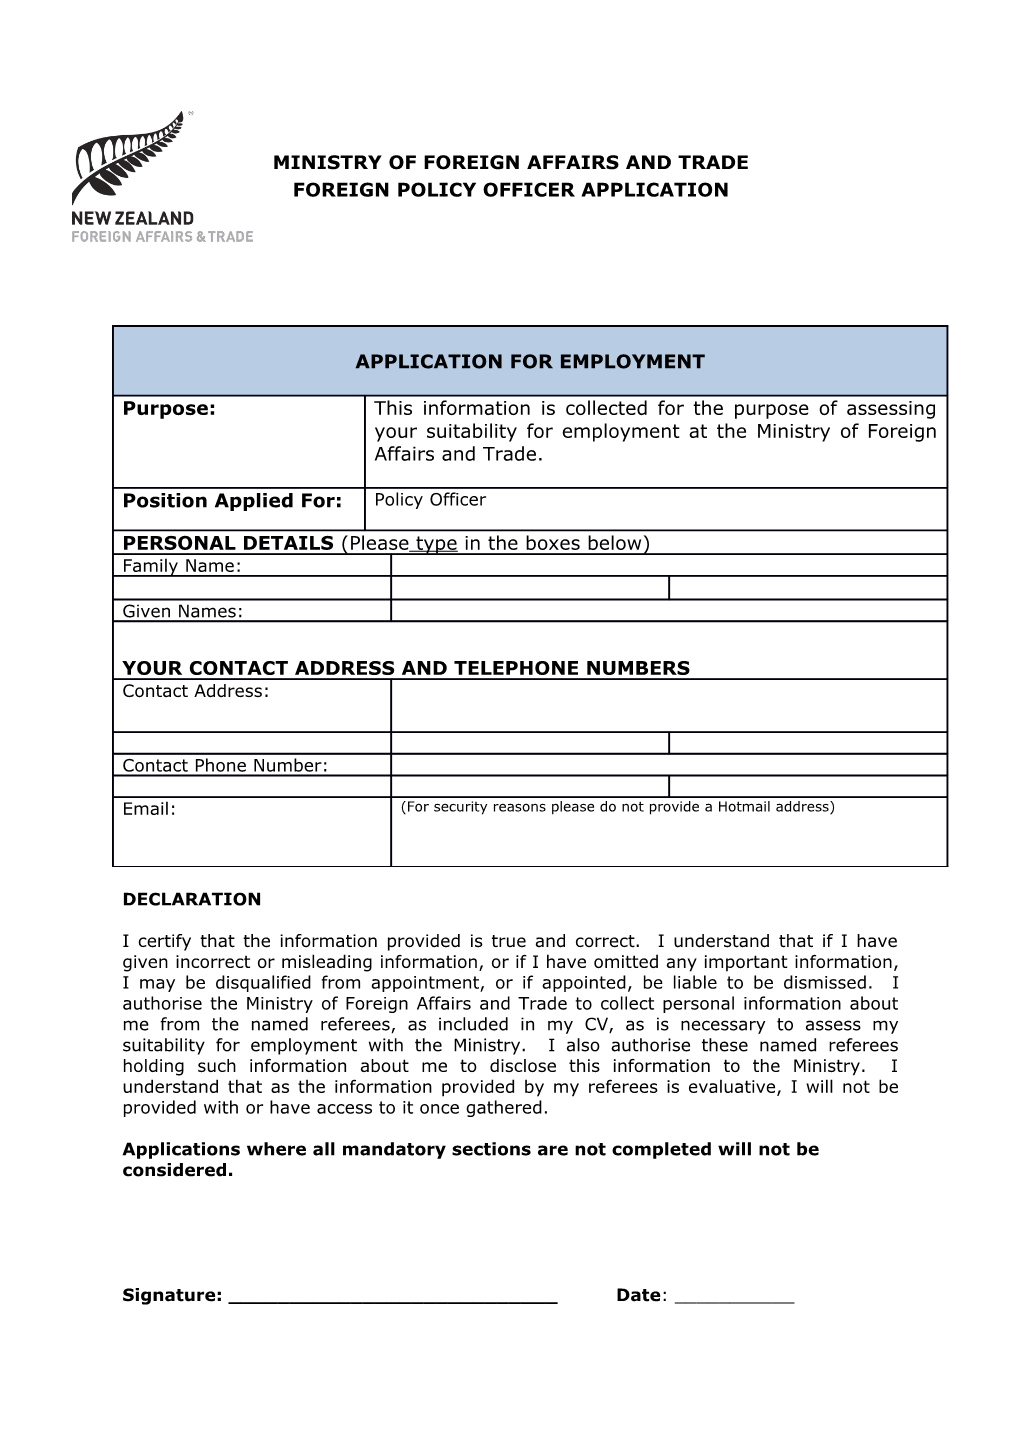 FP Recruitment Application Form